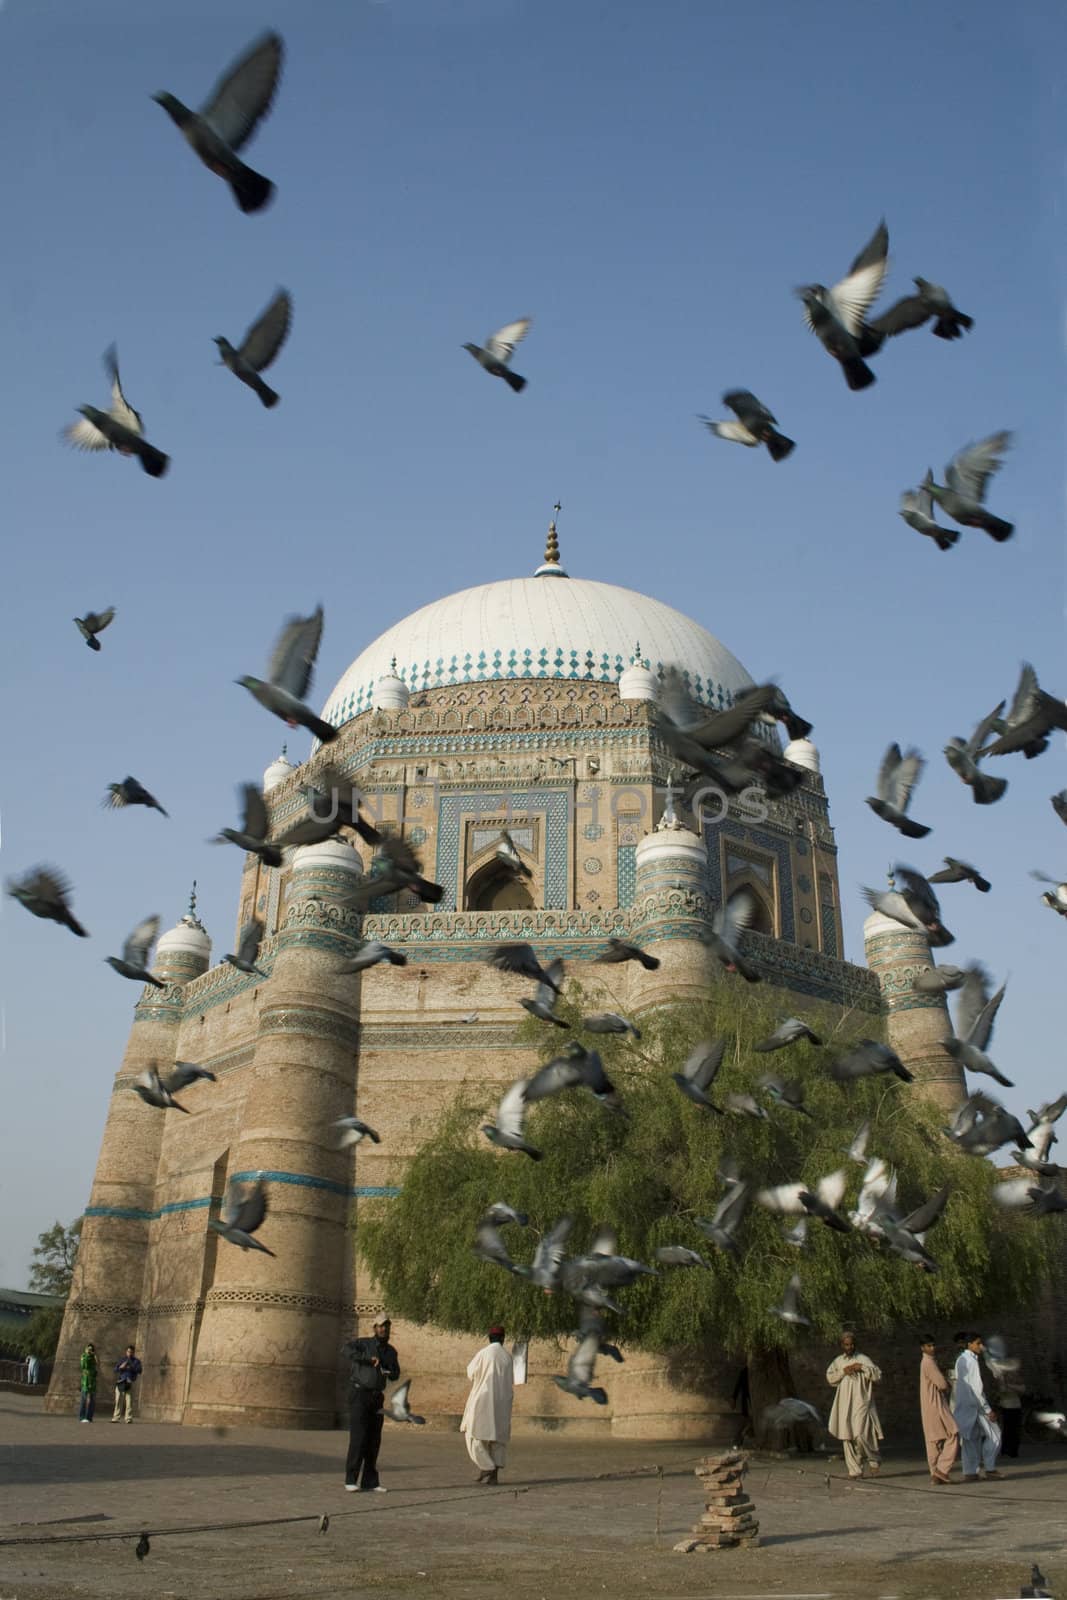 Mausoleum of Shah Rukn-e-Alam by haiderazim